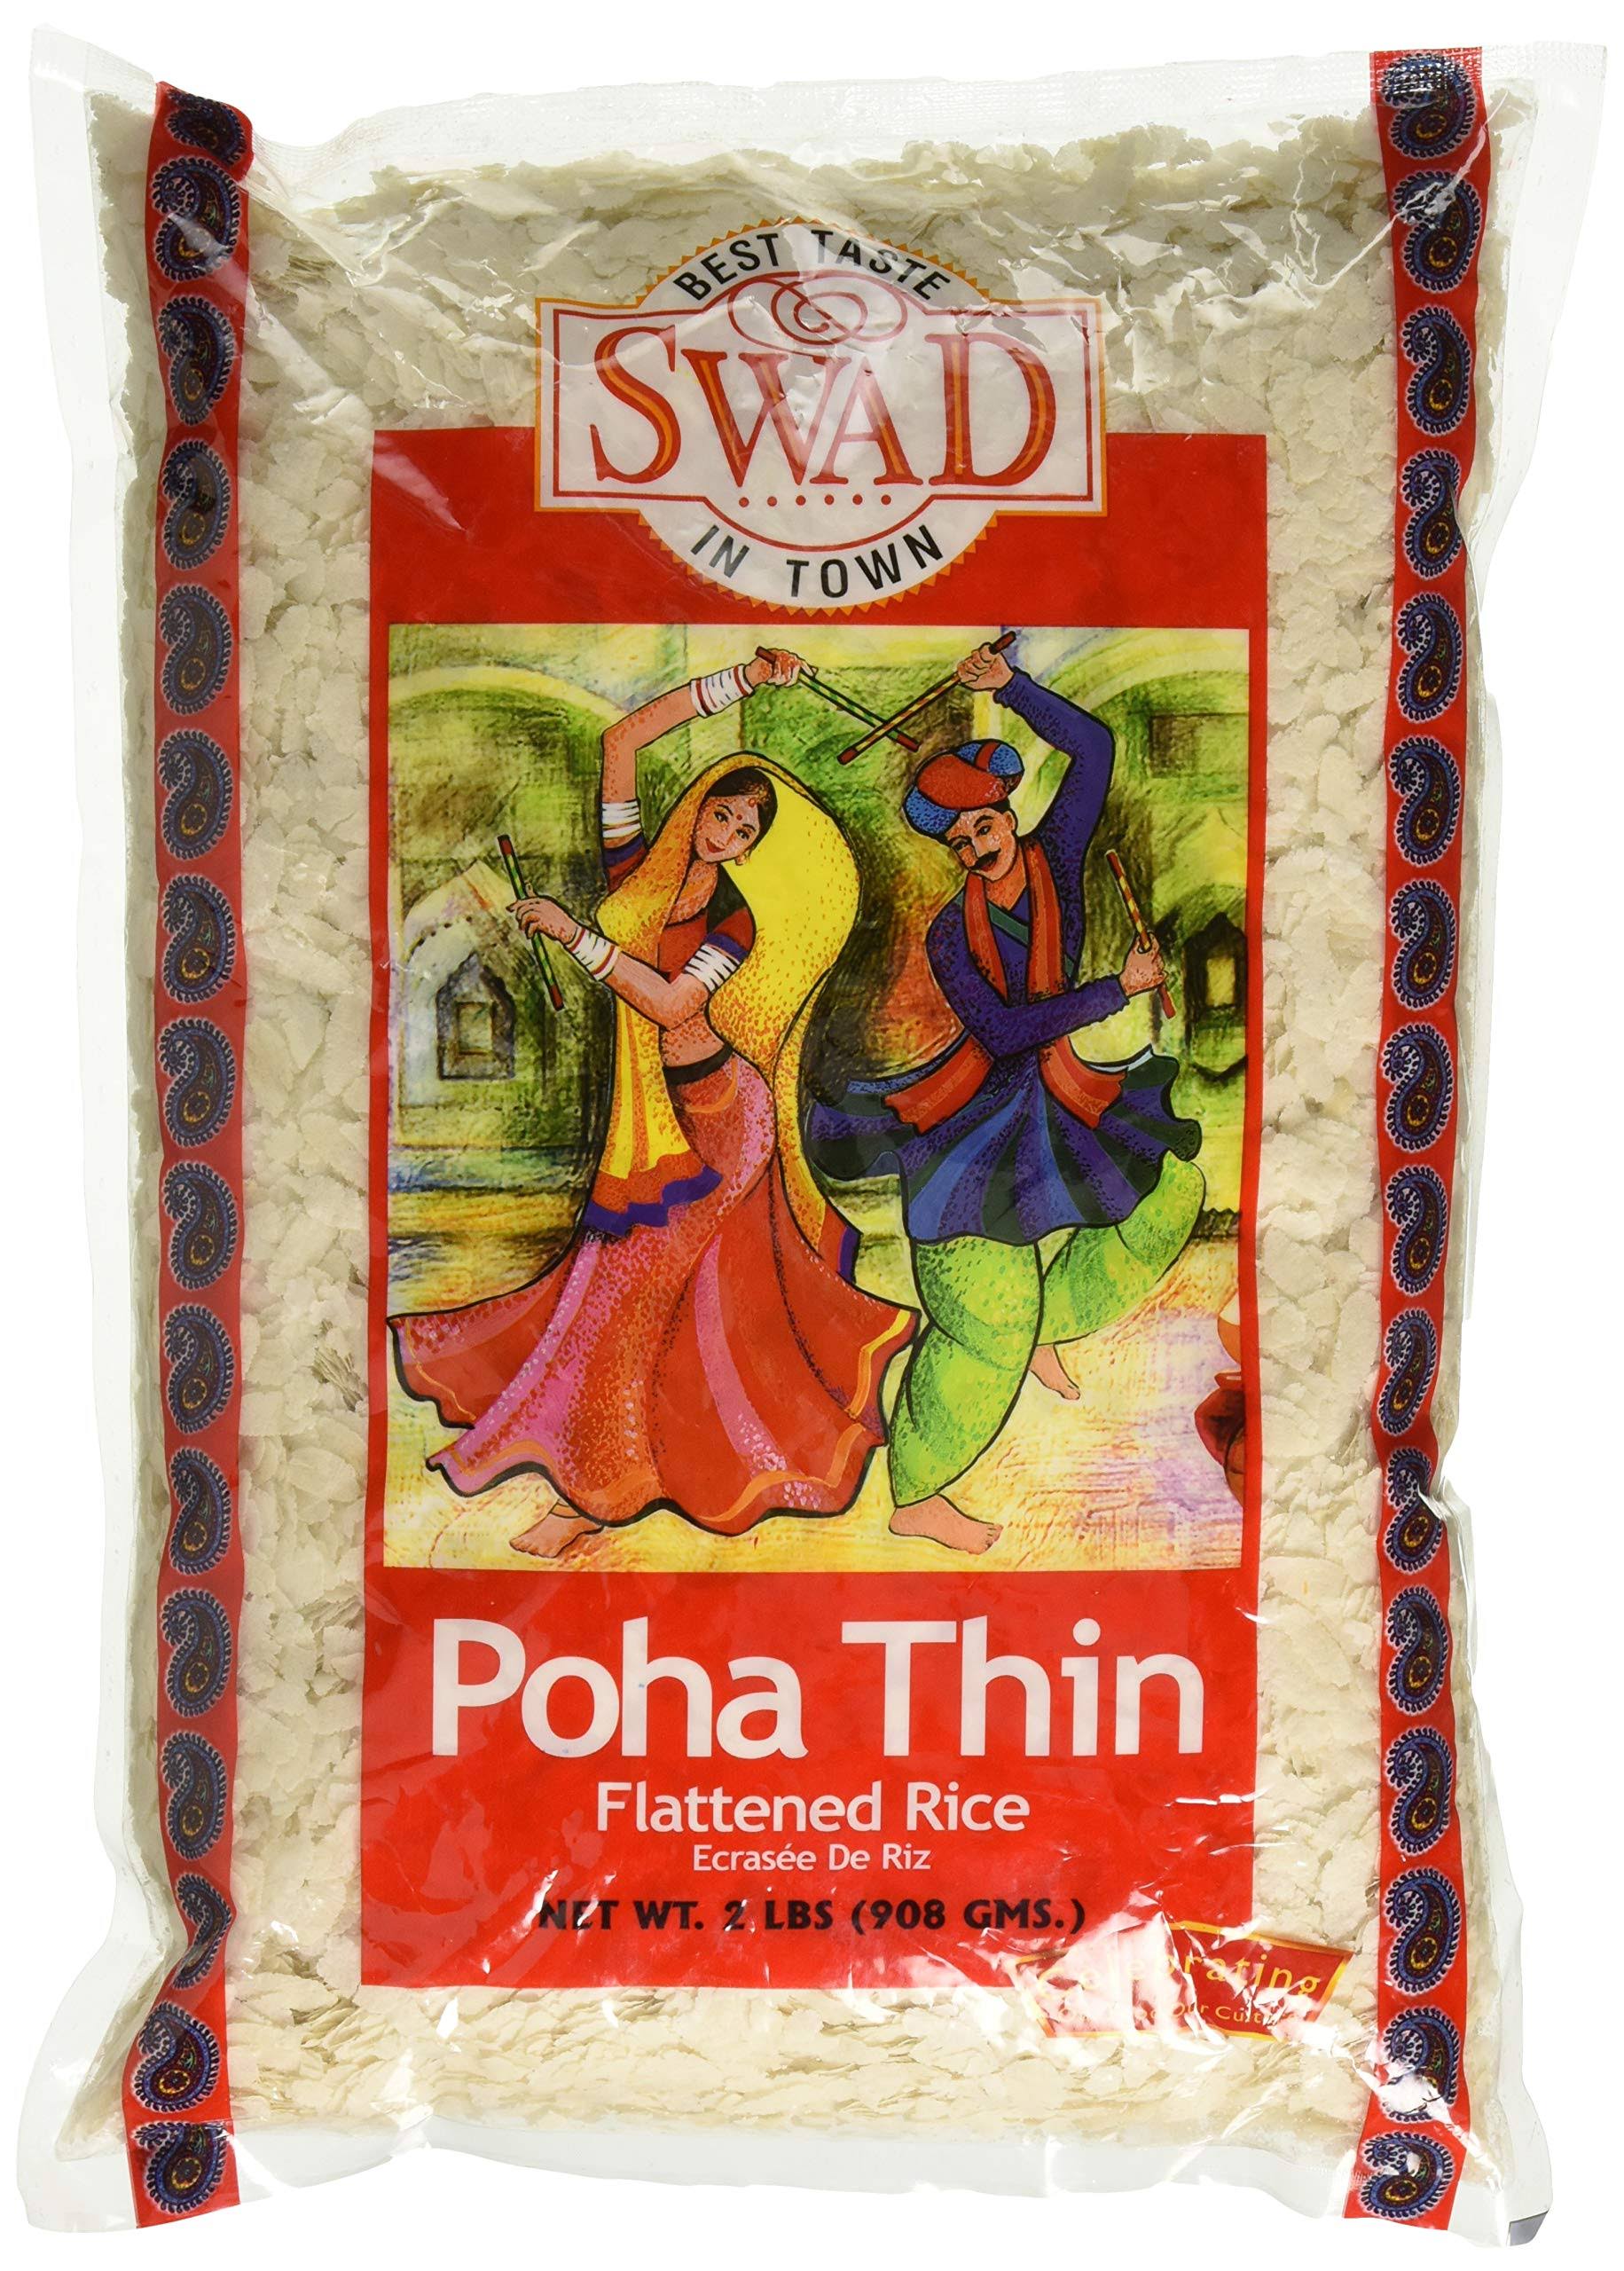 Swad Poha Thin 2 lbs